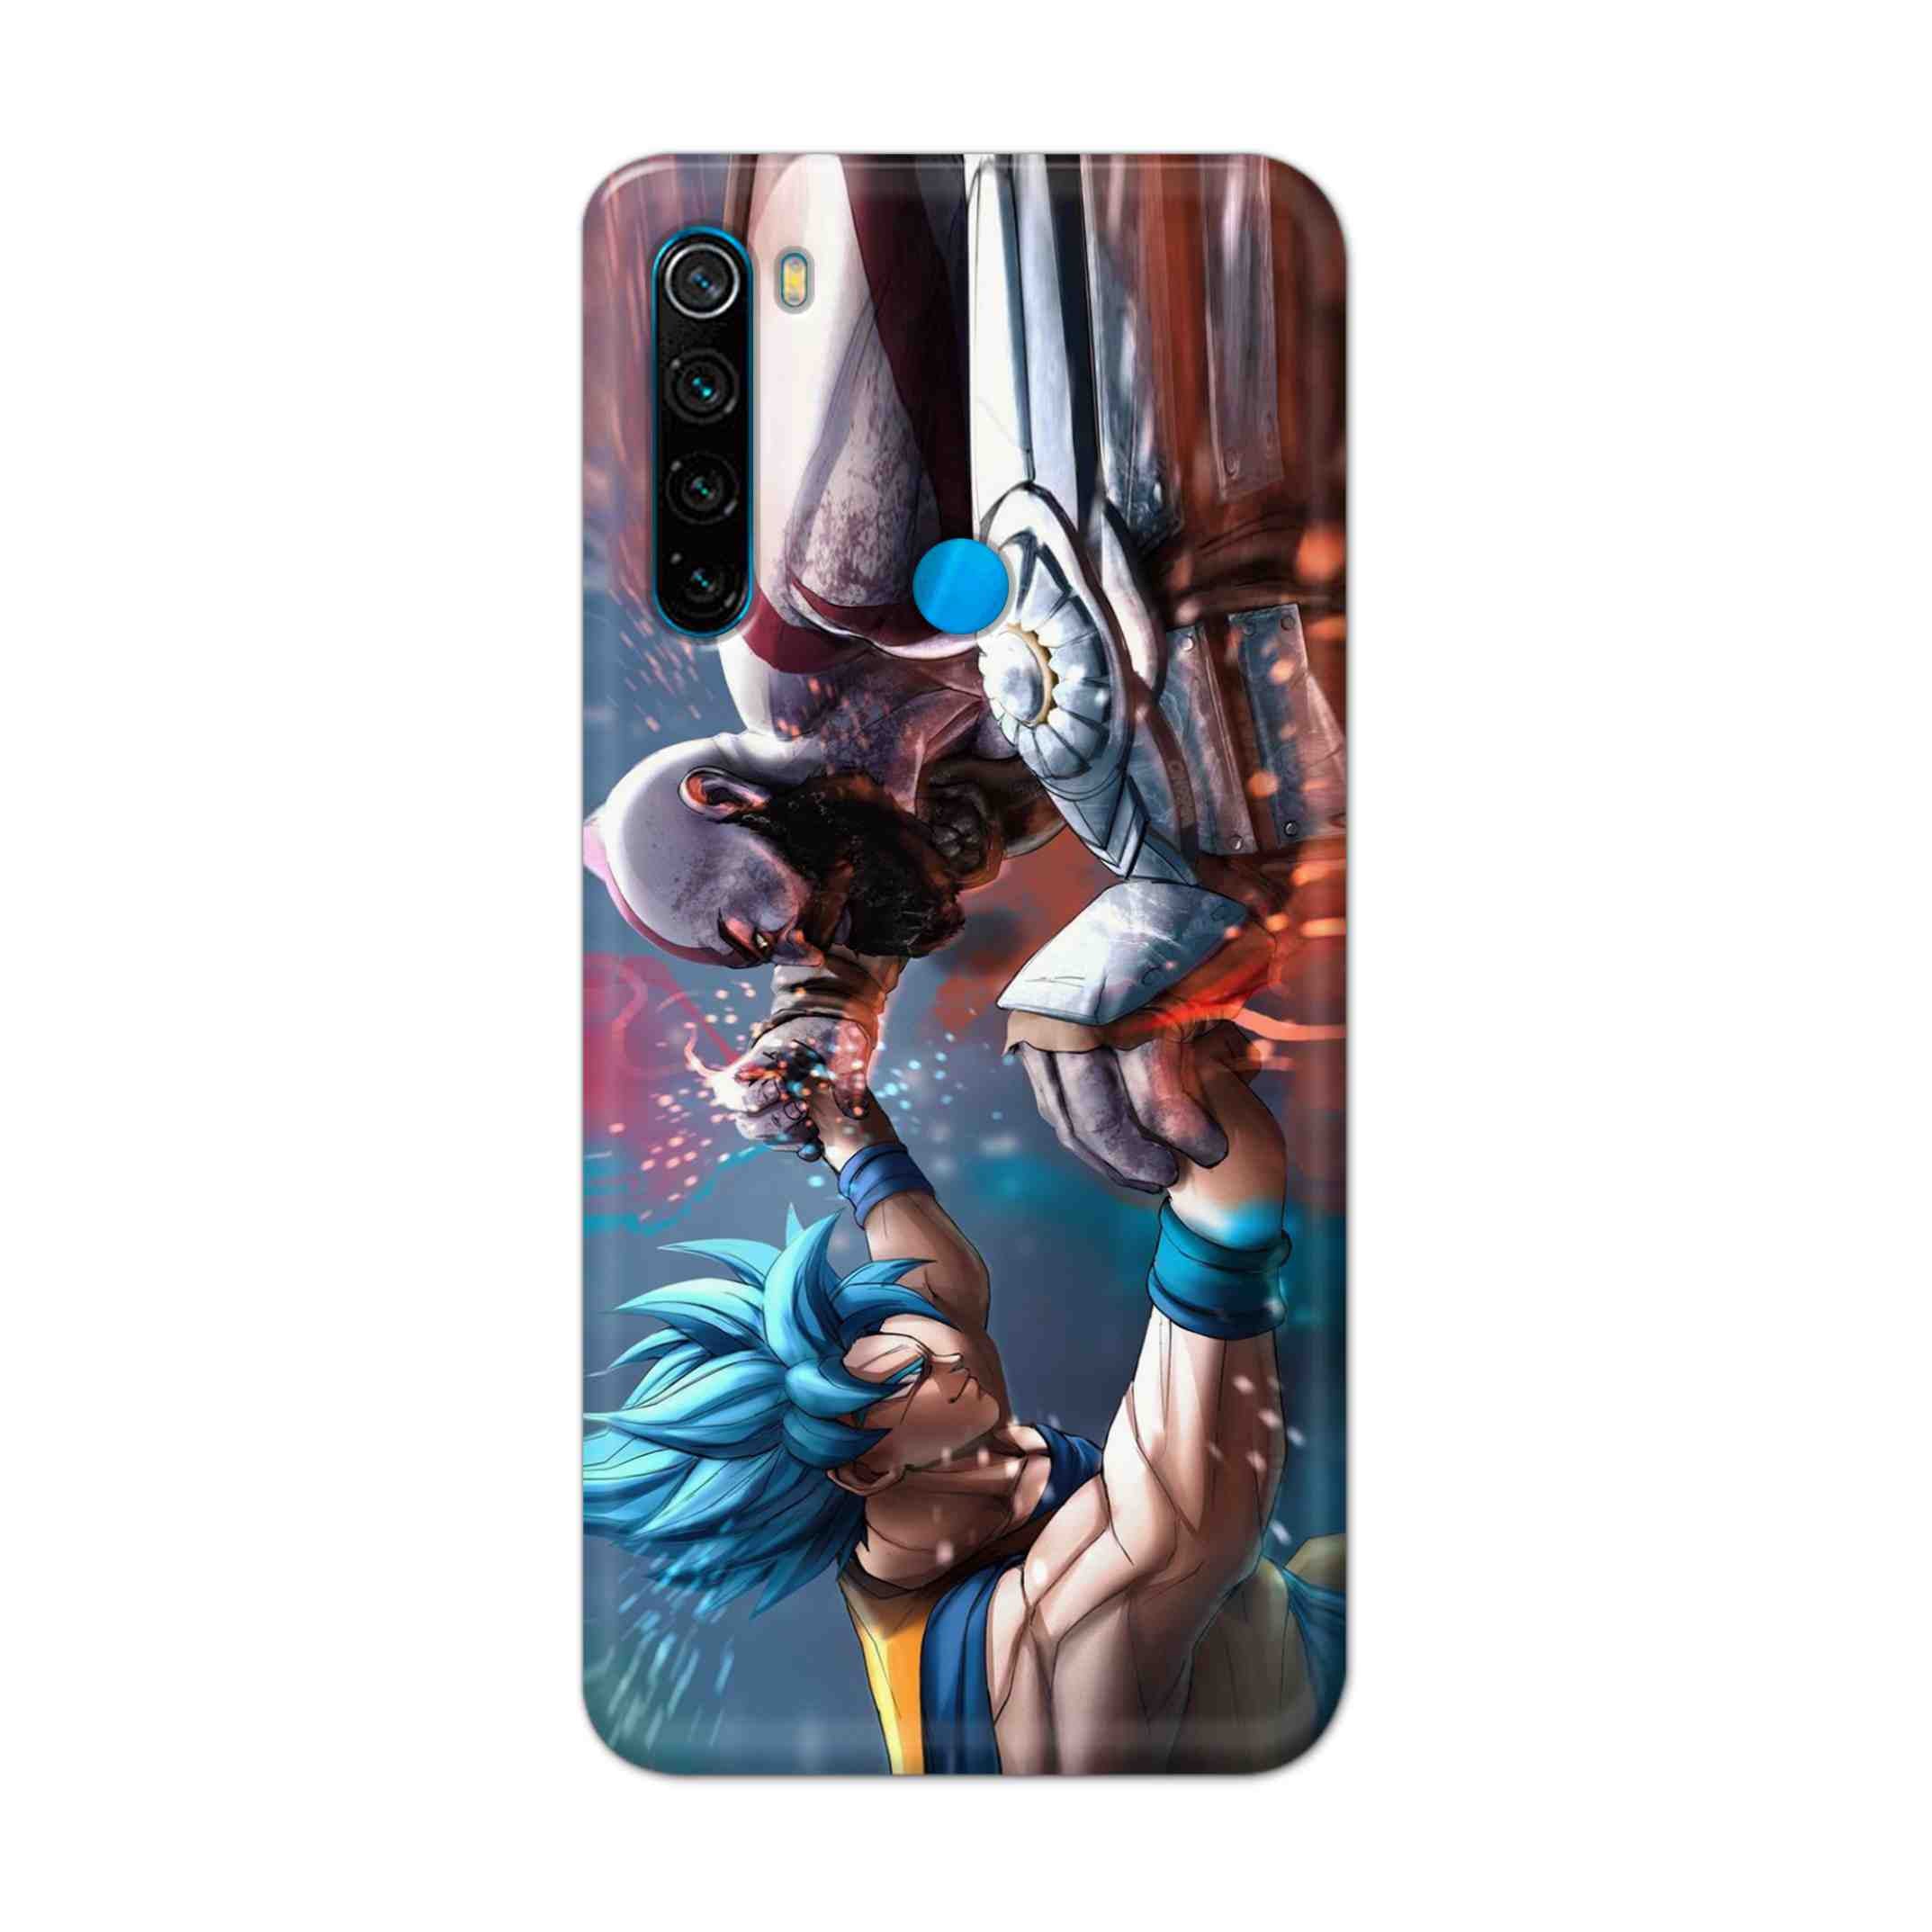 Buy Goku Vs Kratos Hard Back Mobile Phone Case Cover For Xiaomi Redmi Note 8 Online